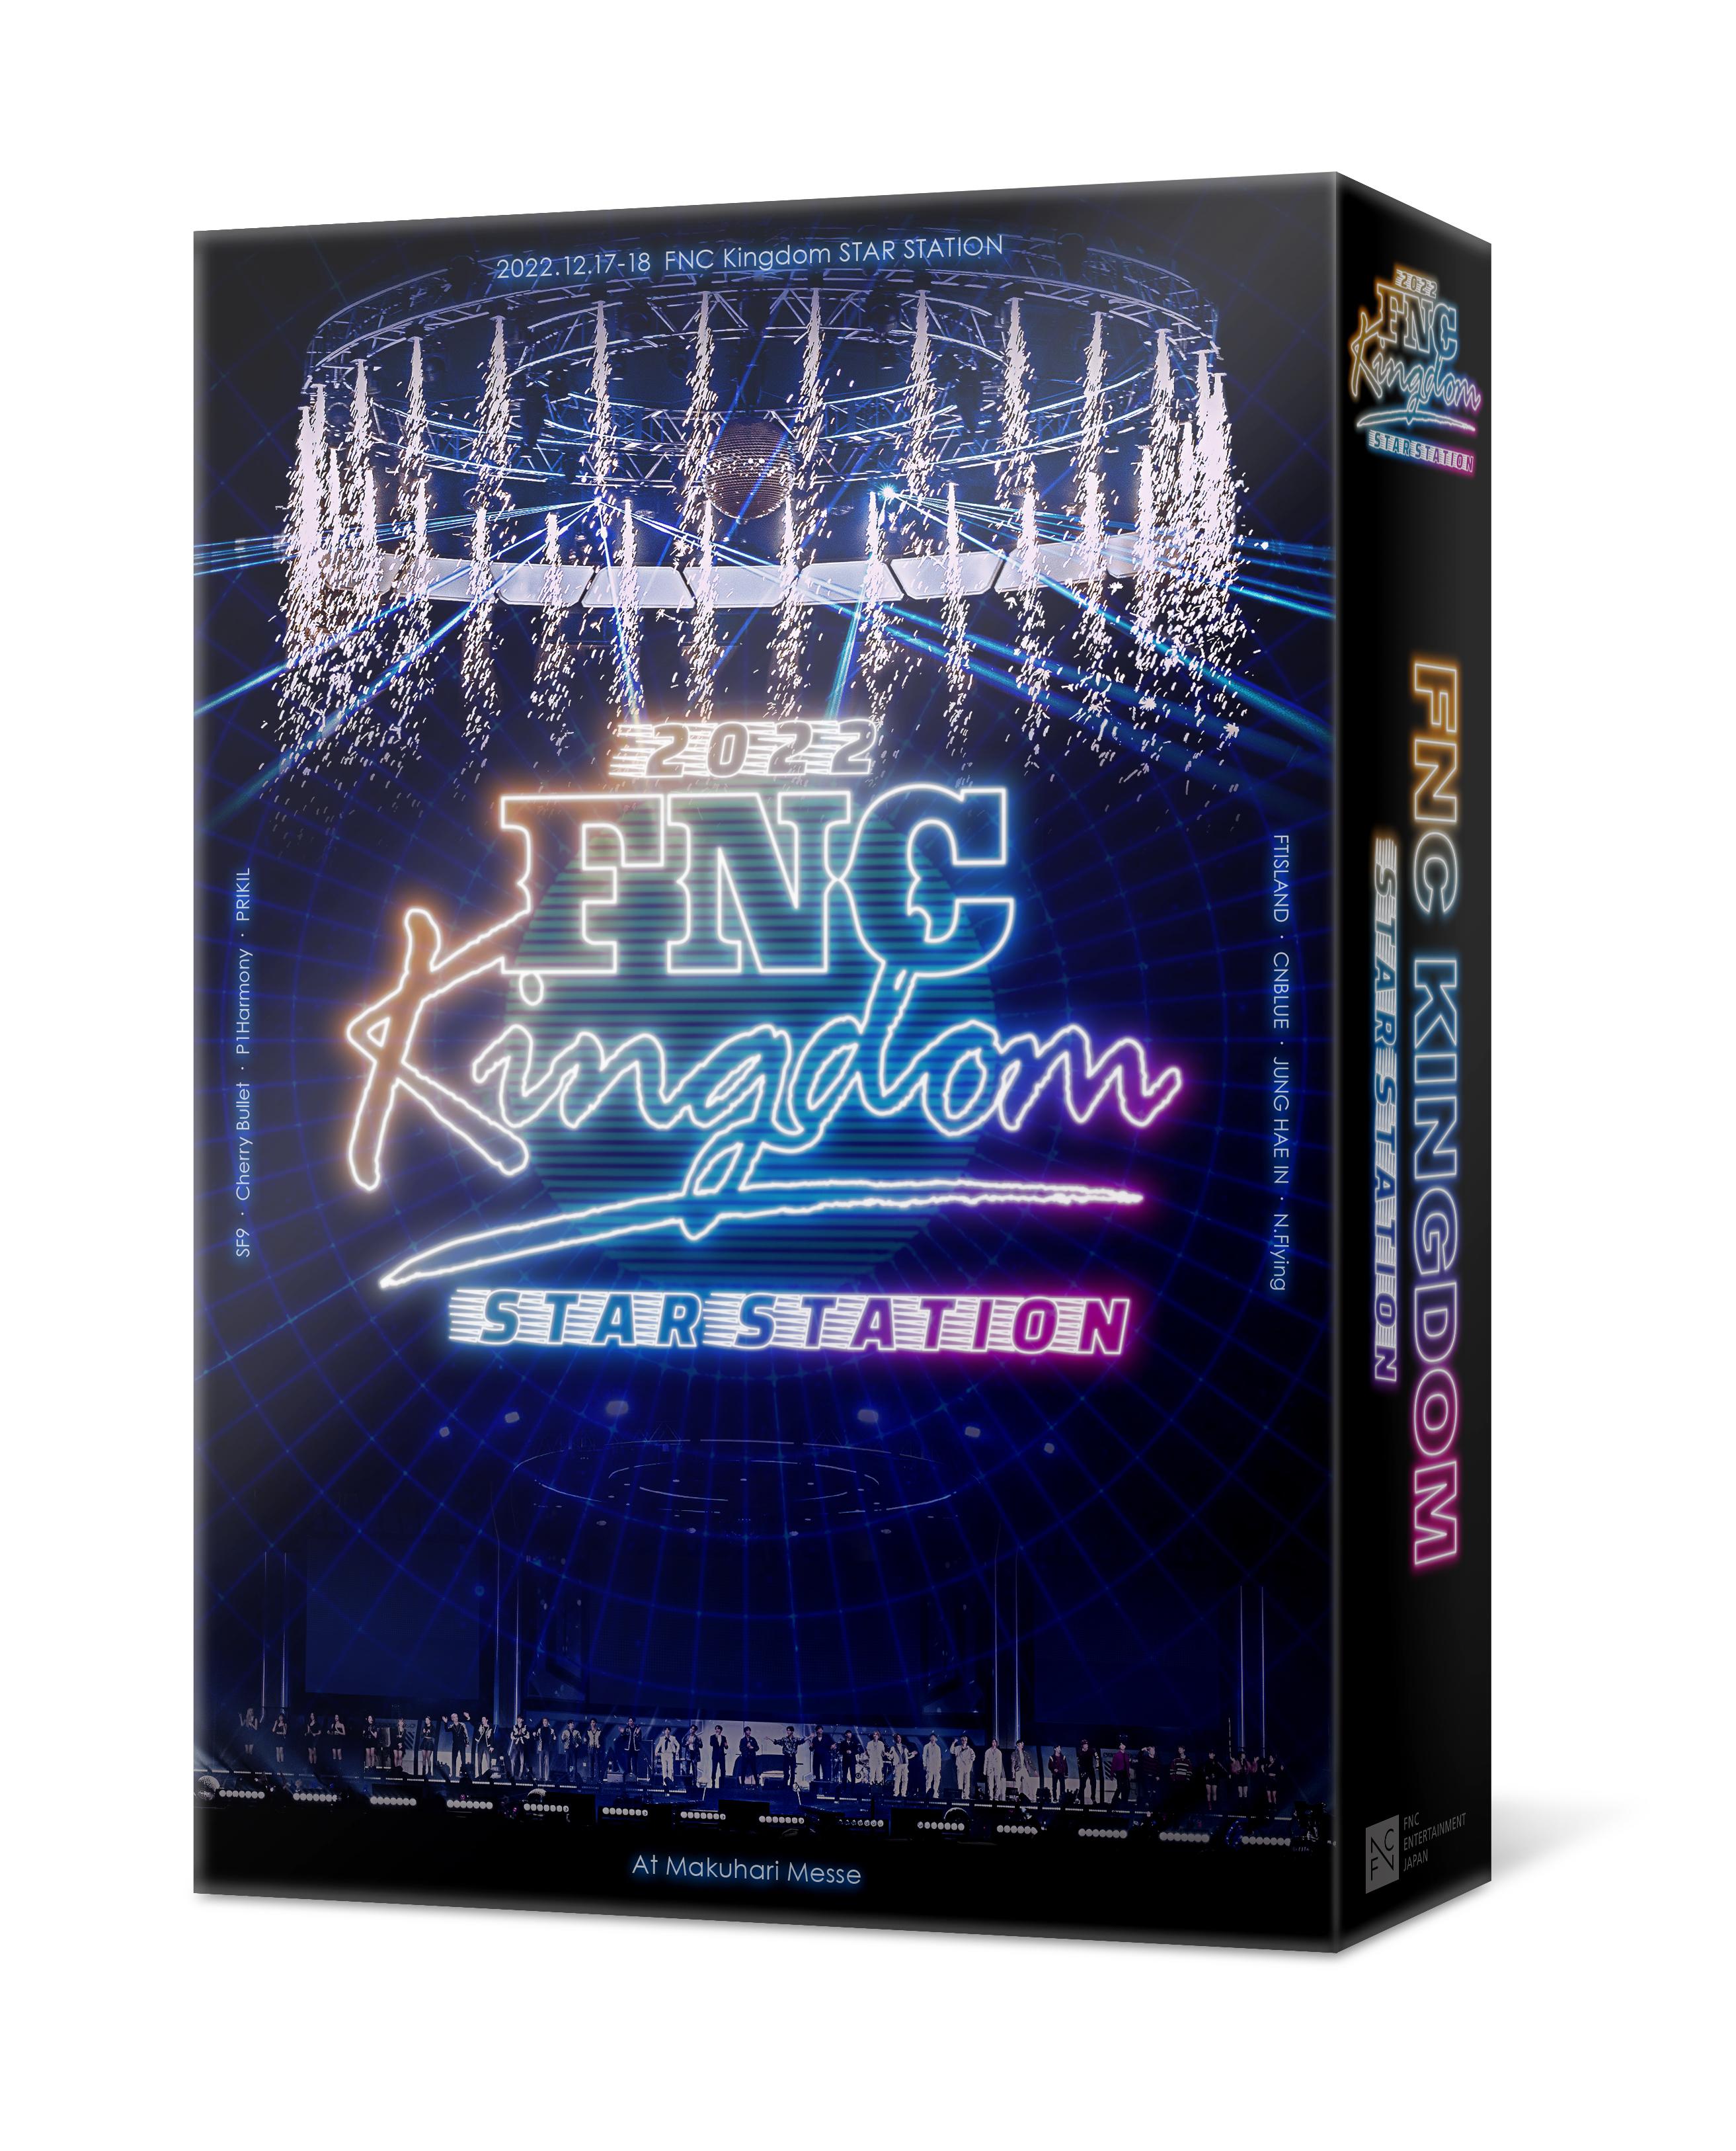 FNC ファミリーが3年ぶりに幕張に大集結！『2022 FNC KINGDOM - STAR 